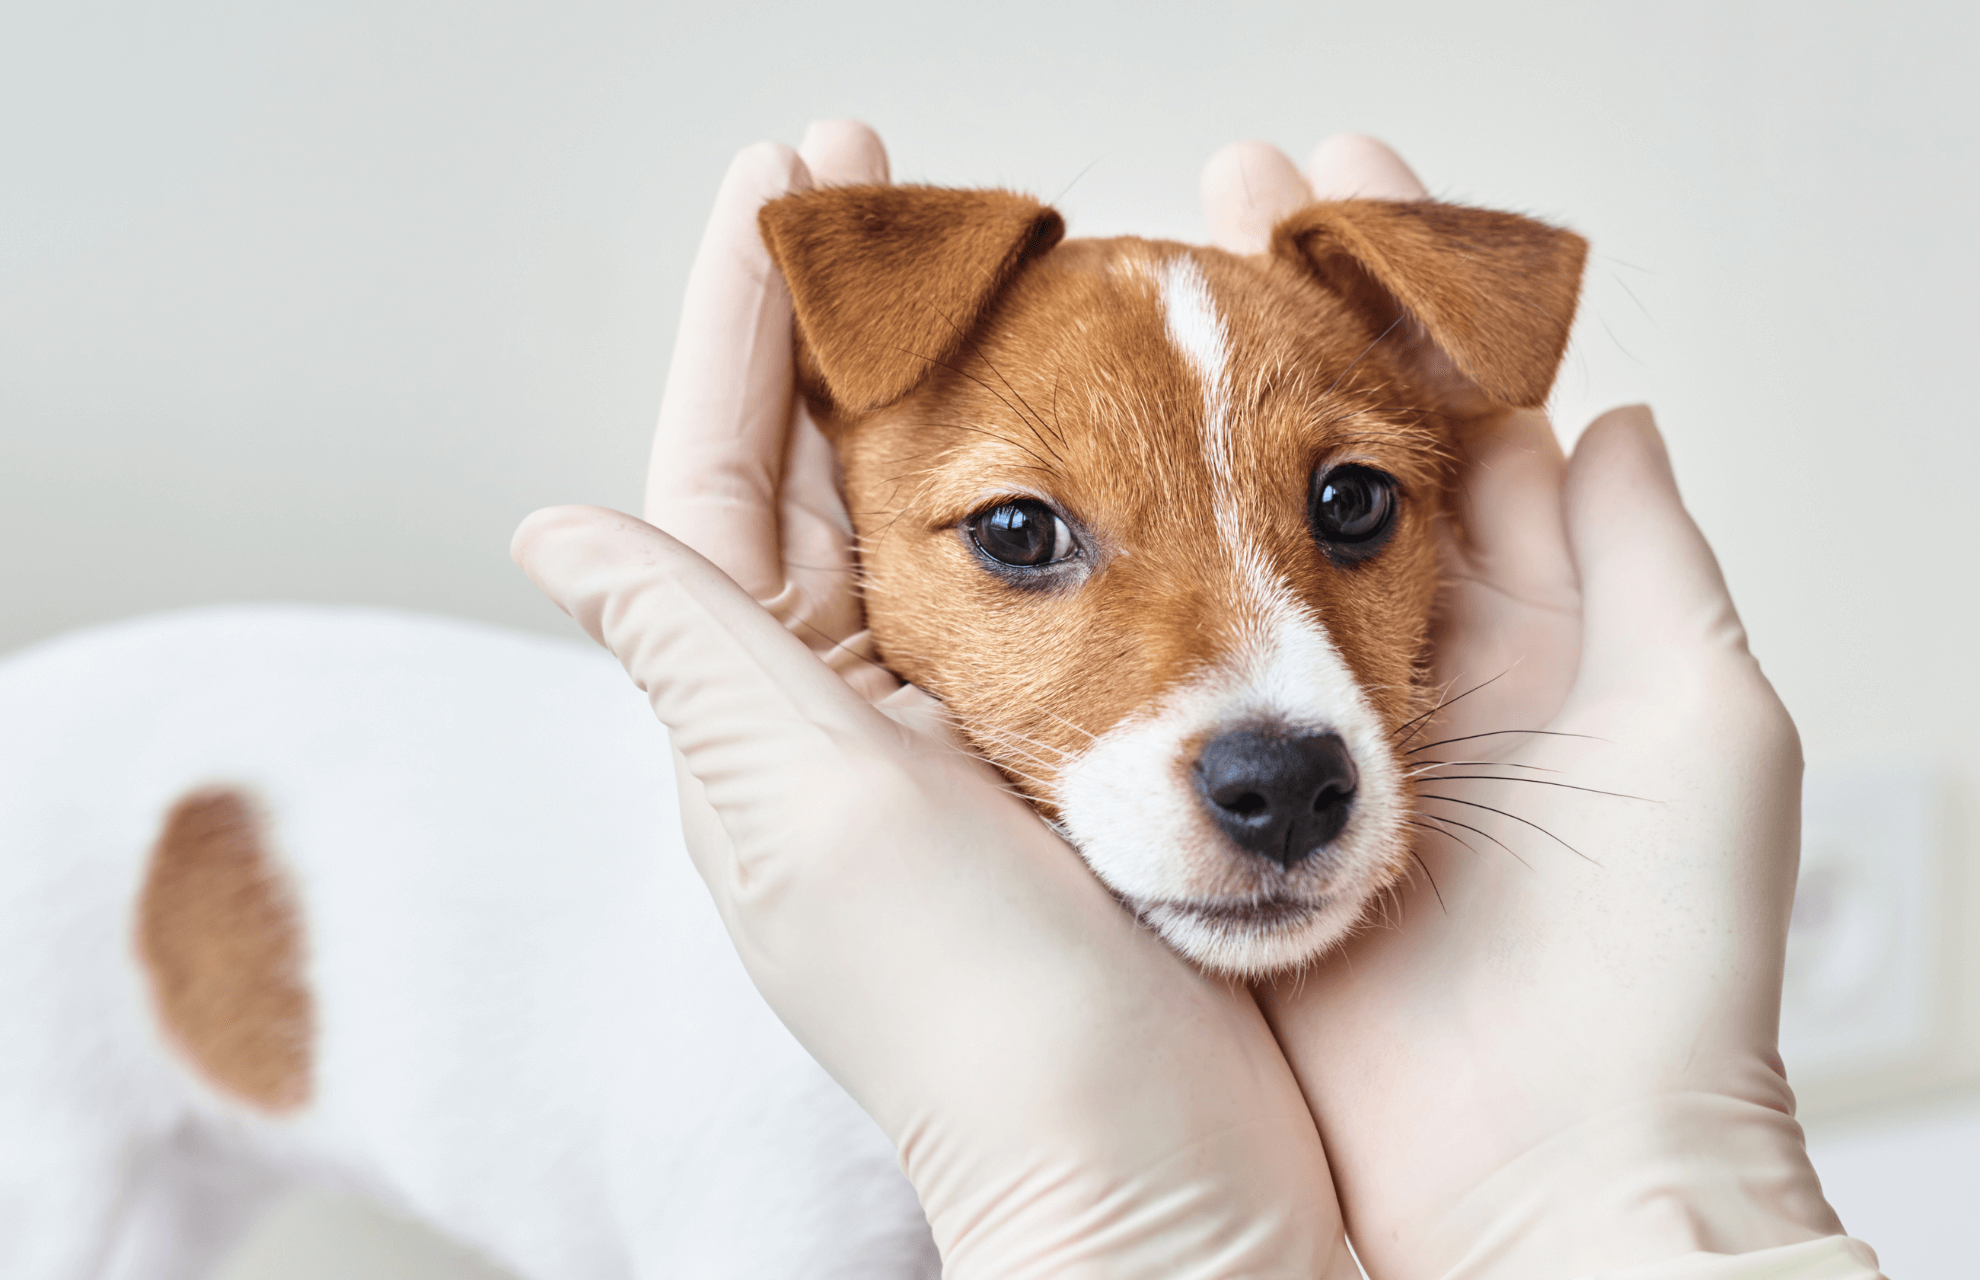 Veterinary doctor examines puppy dog.